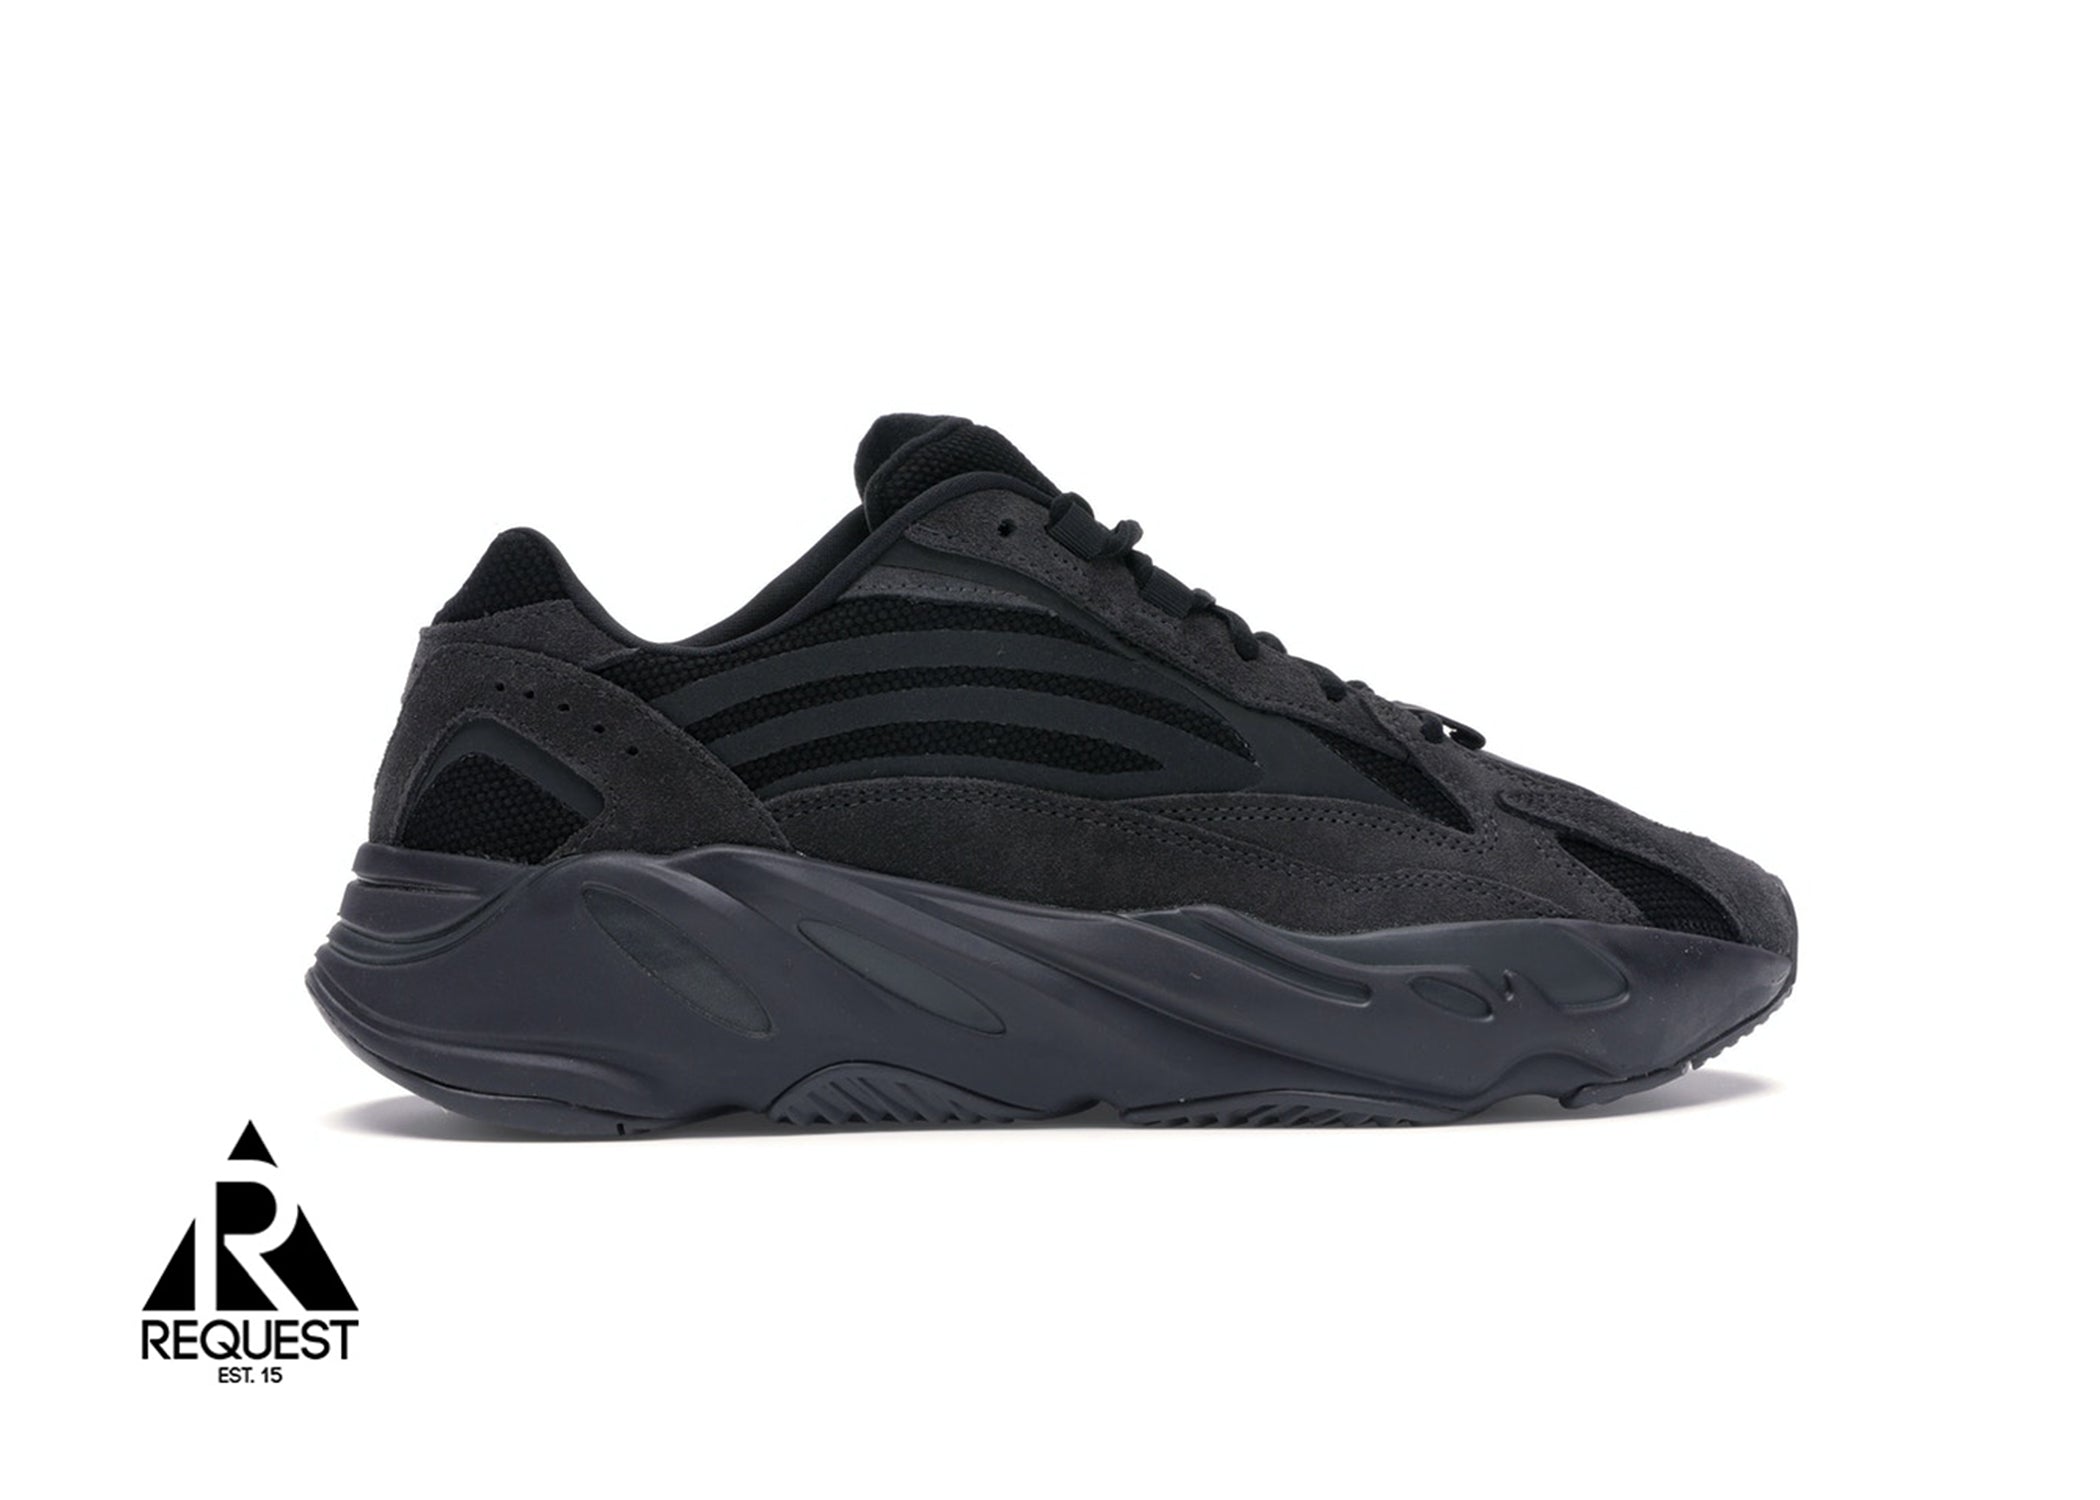 Adidas Yeezy 700 V2 “Vanta” | Request